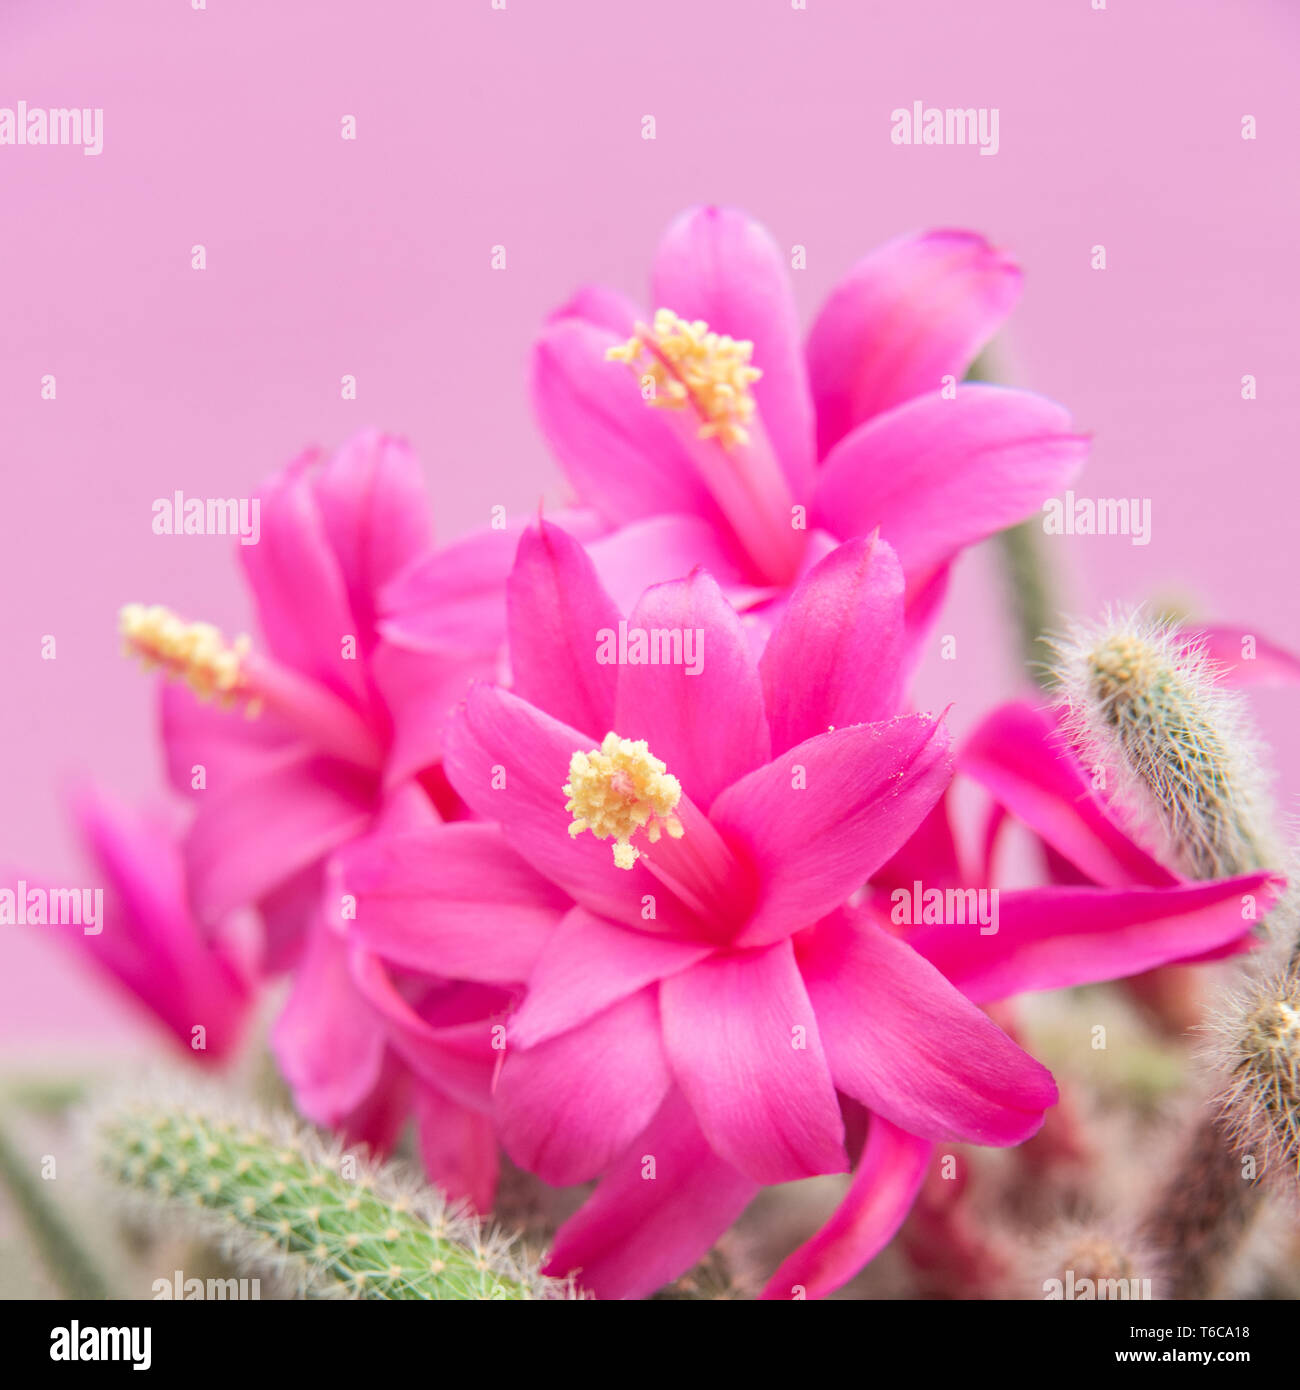 aporocactus flagelliformis with pink flowers Stock Photo